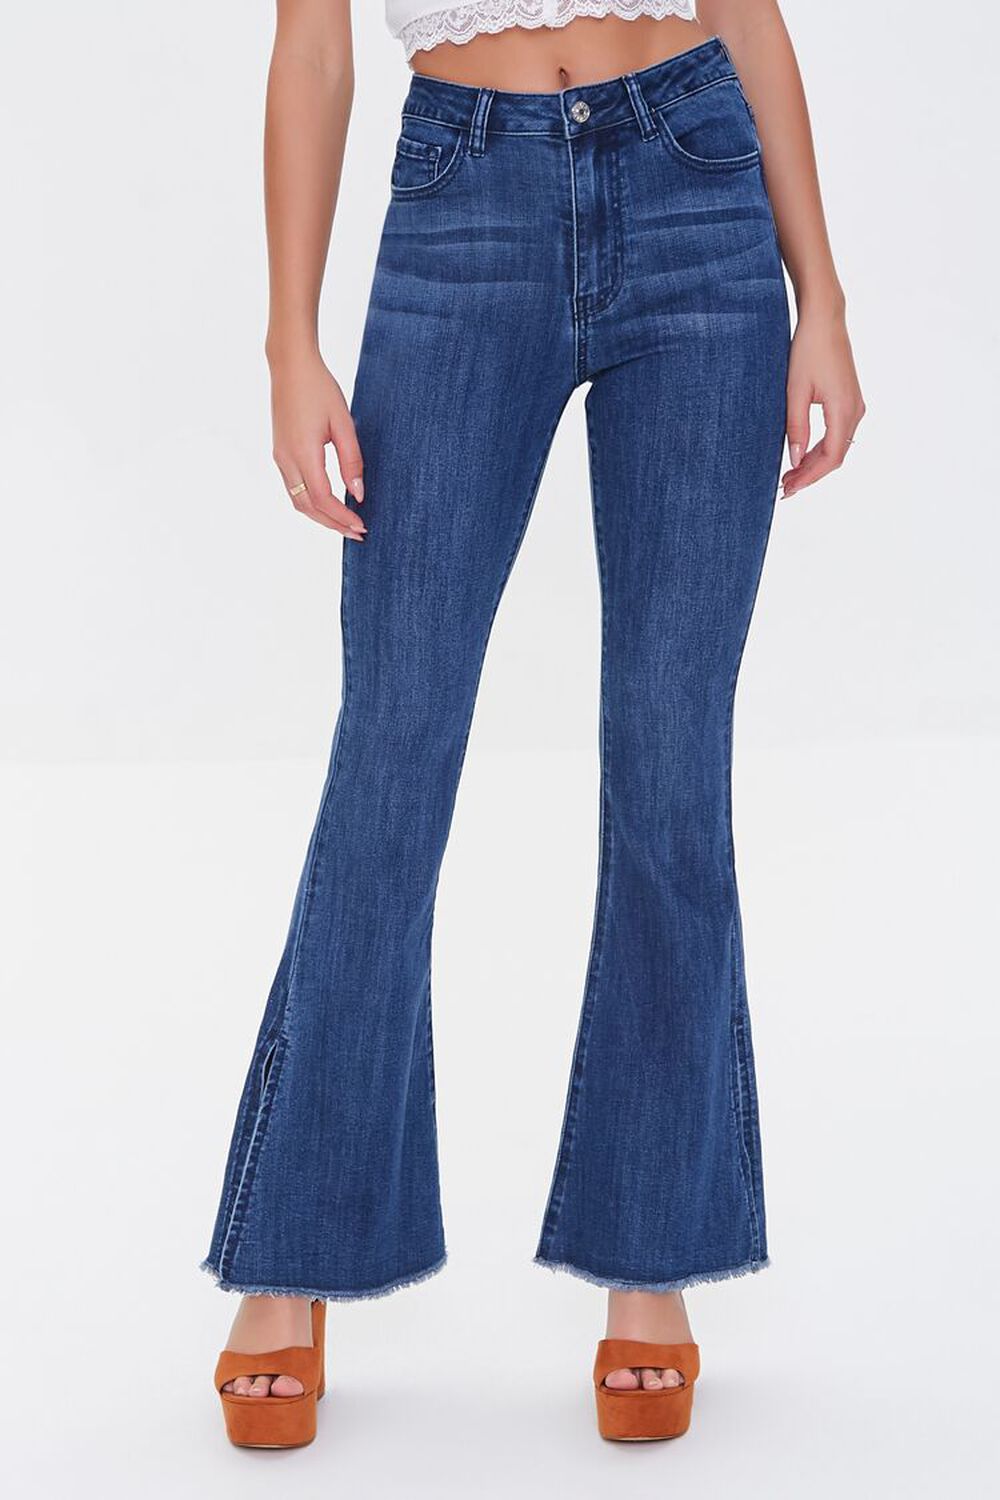 DARK DENIM Premium Split-Leg Flare Jeans, image 2